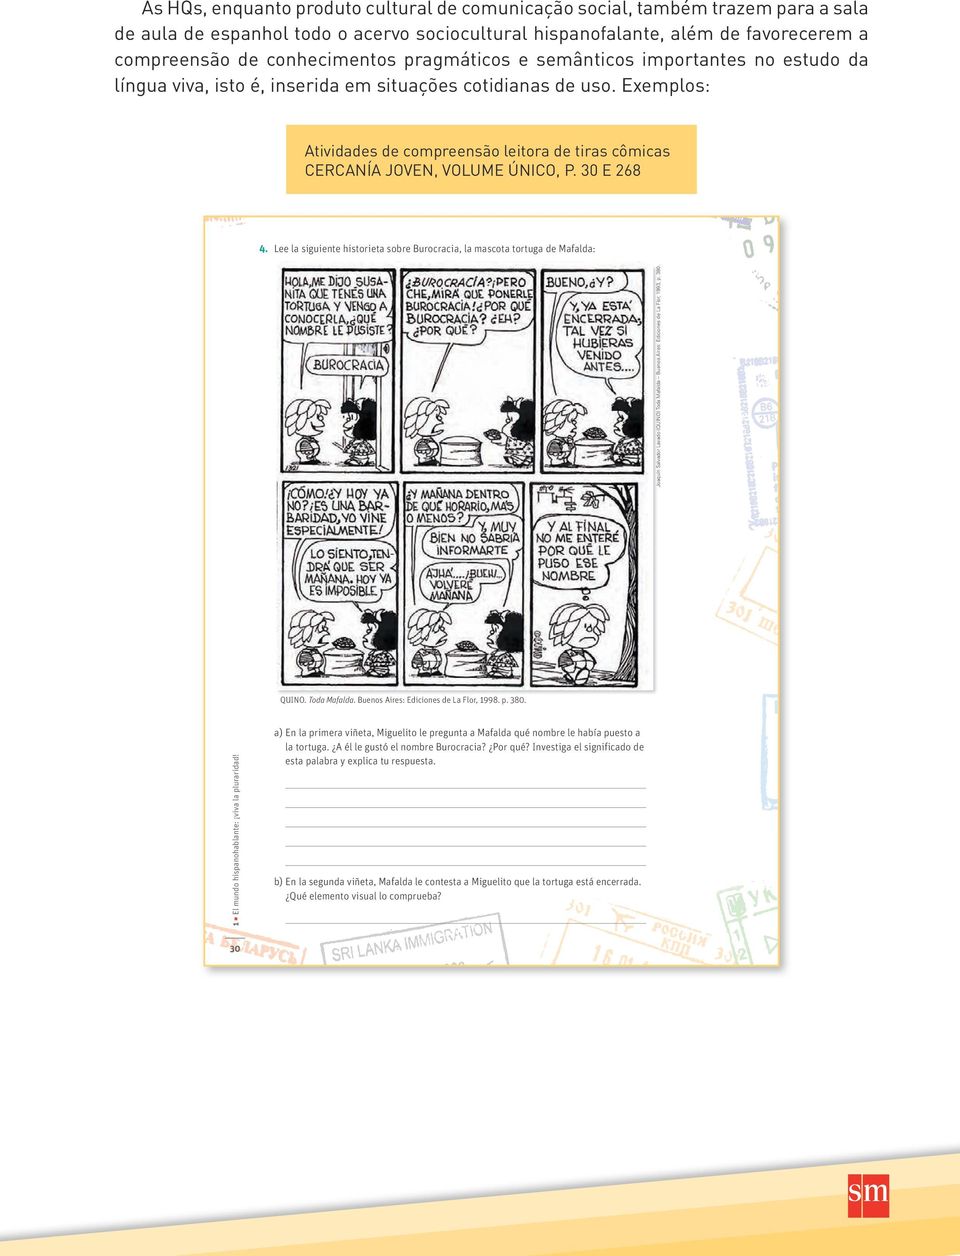 Exemplos: Atividades de compreensão leitora de tiras cômicas CERCANÍA JOVEN, VOLUME ÚNICO, P. 30 E 268 Joaquín Salvador Lavado (QUINO) Toda Mafalda Buenos Aires: Ediciones de La Flor, 1993, p. 380. 4.